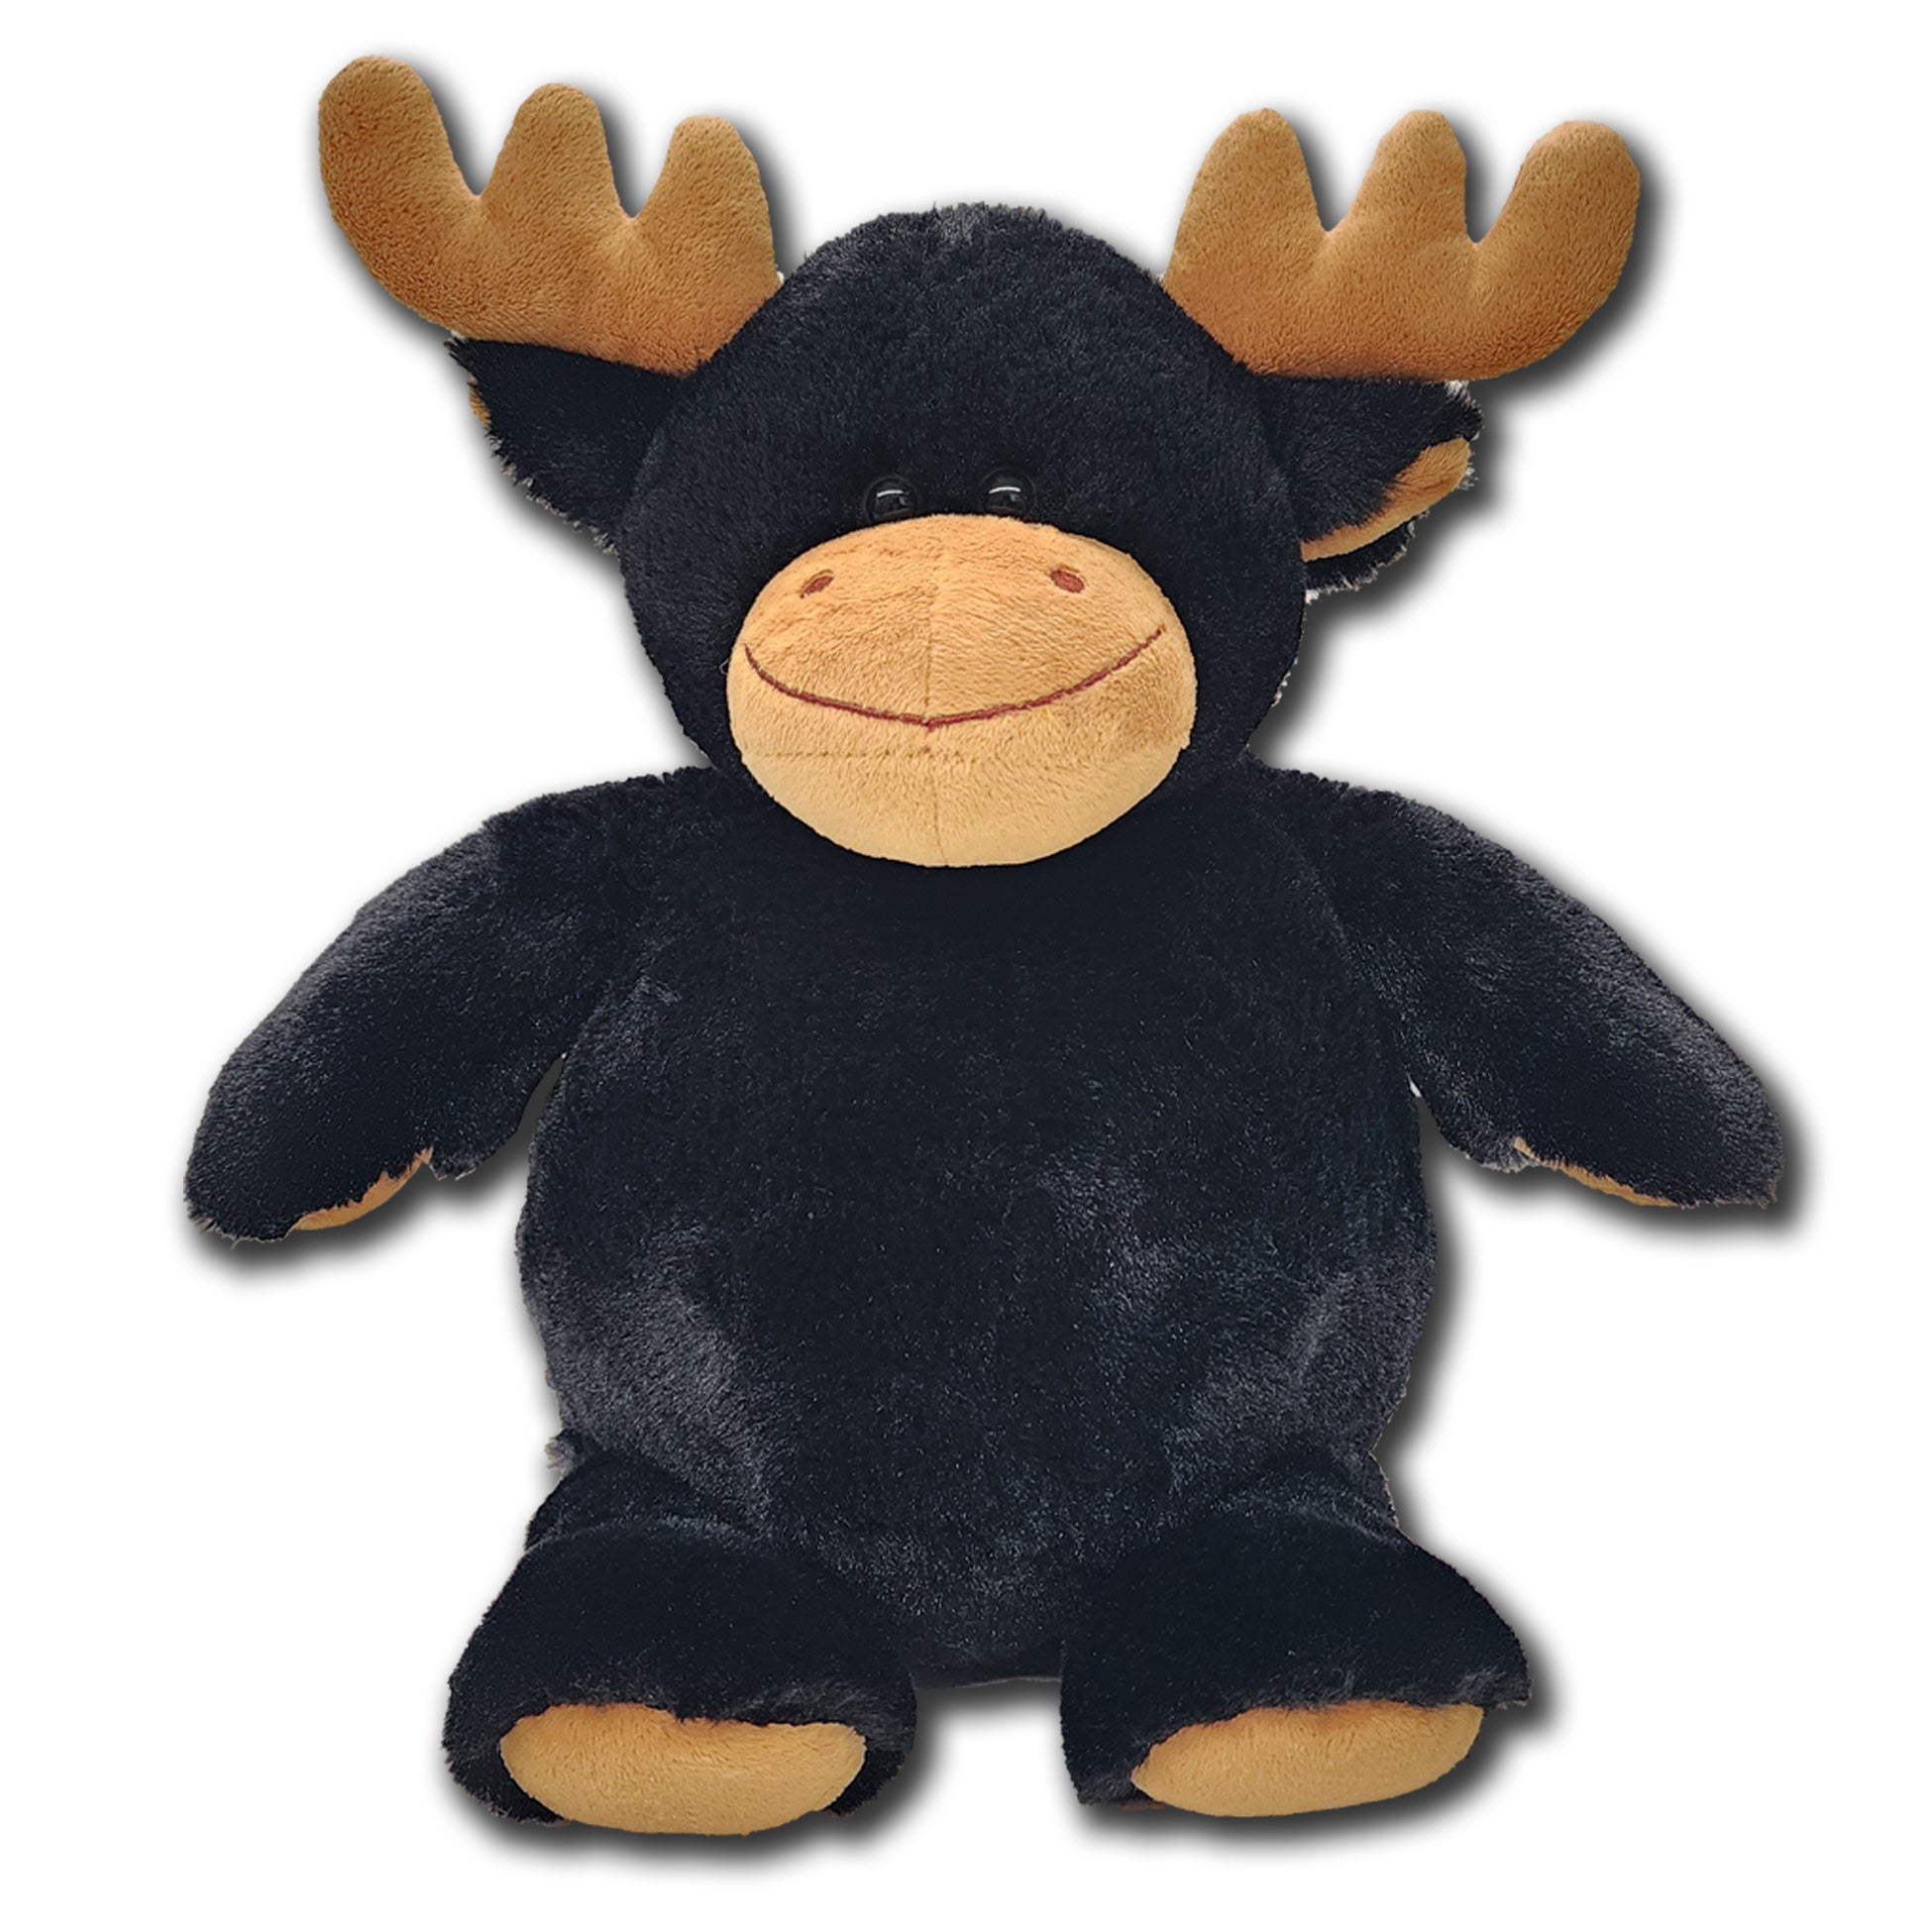 Cuddle Buddy Moosey - Heated Stuffed Animal